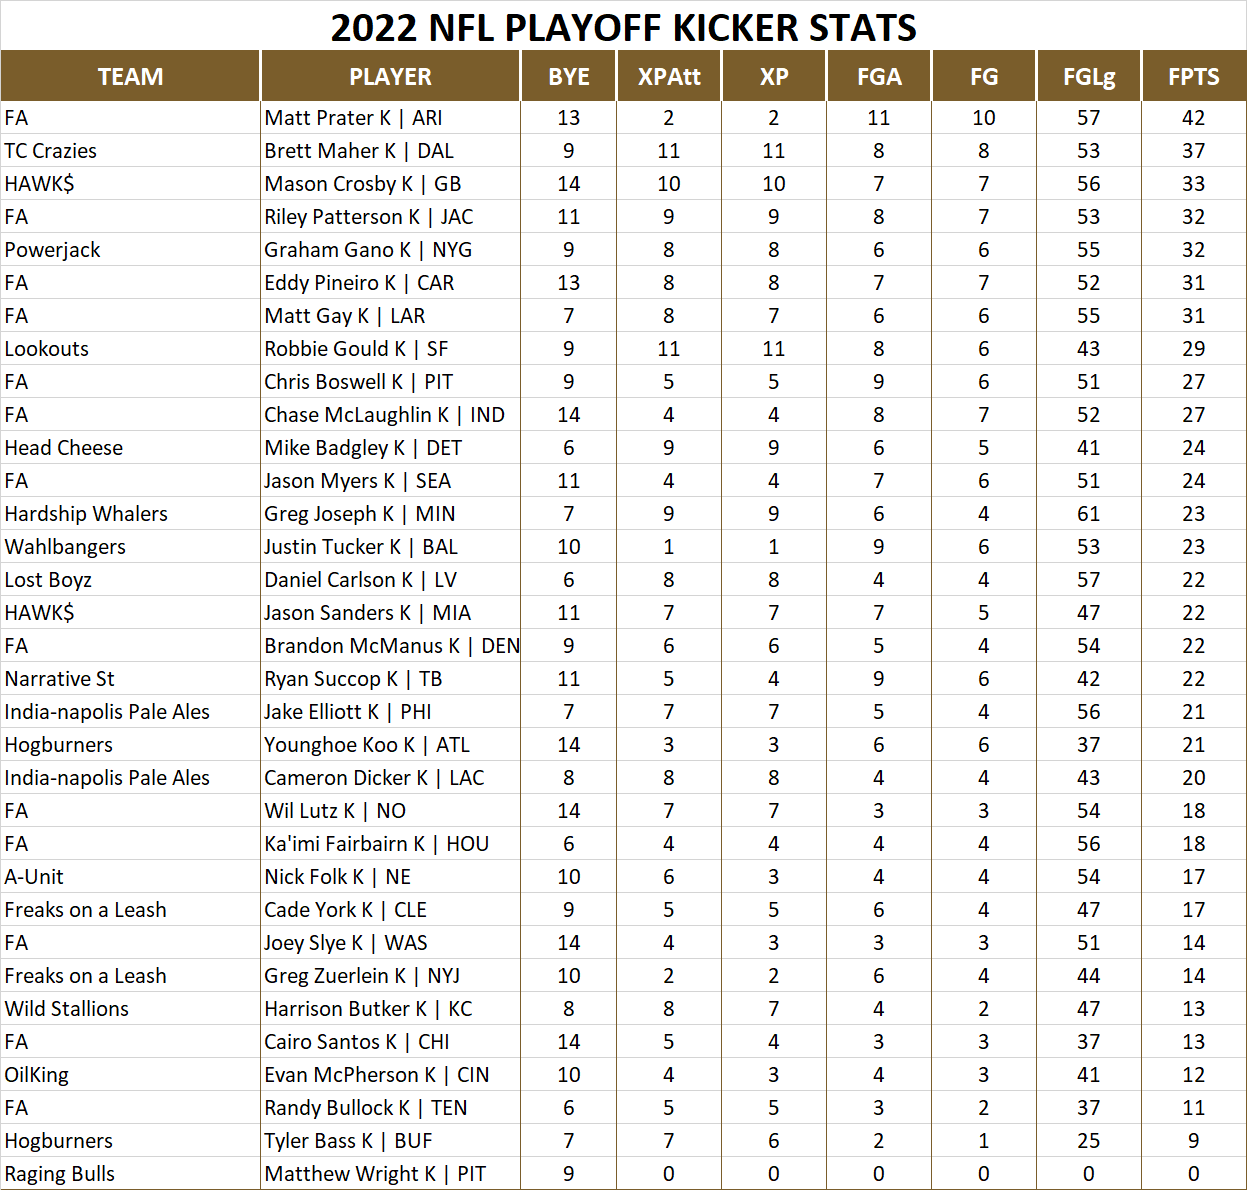 2022 National Football League Pool Playoff Player Kicker Stats